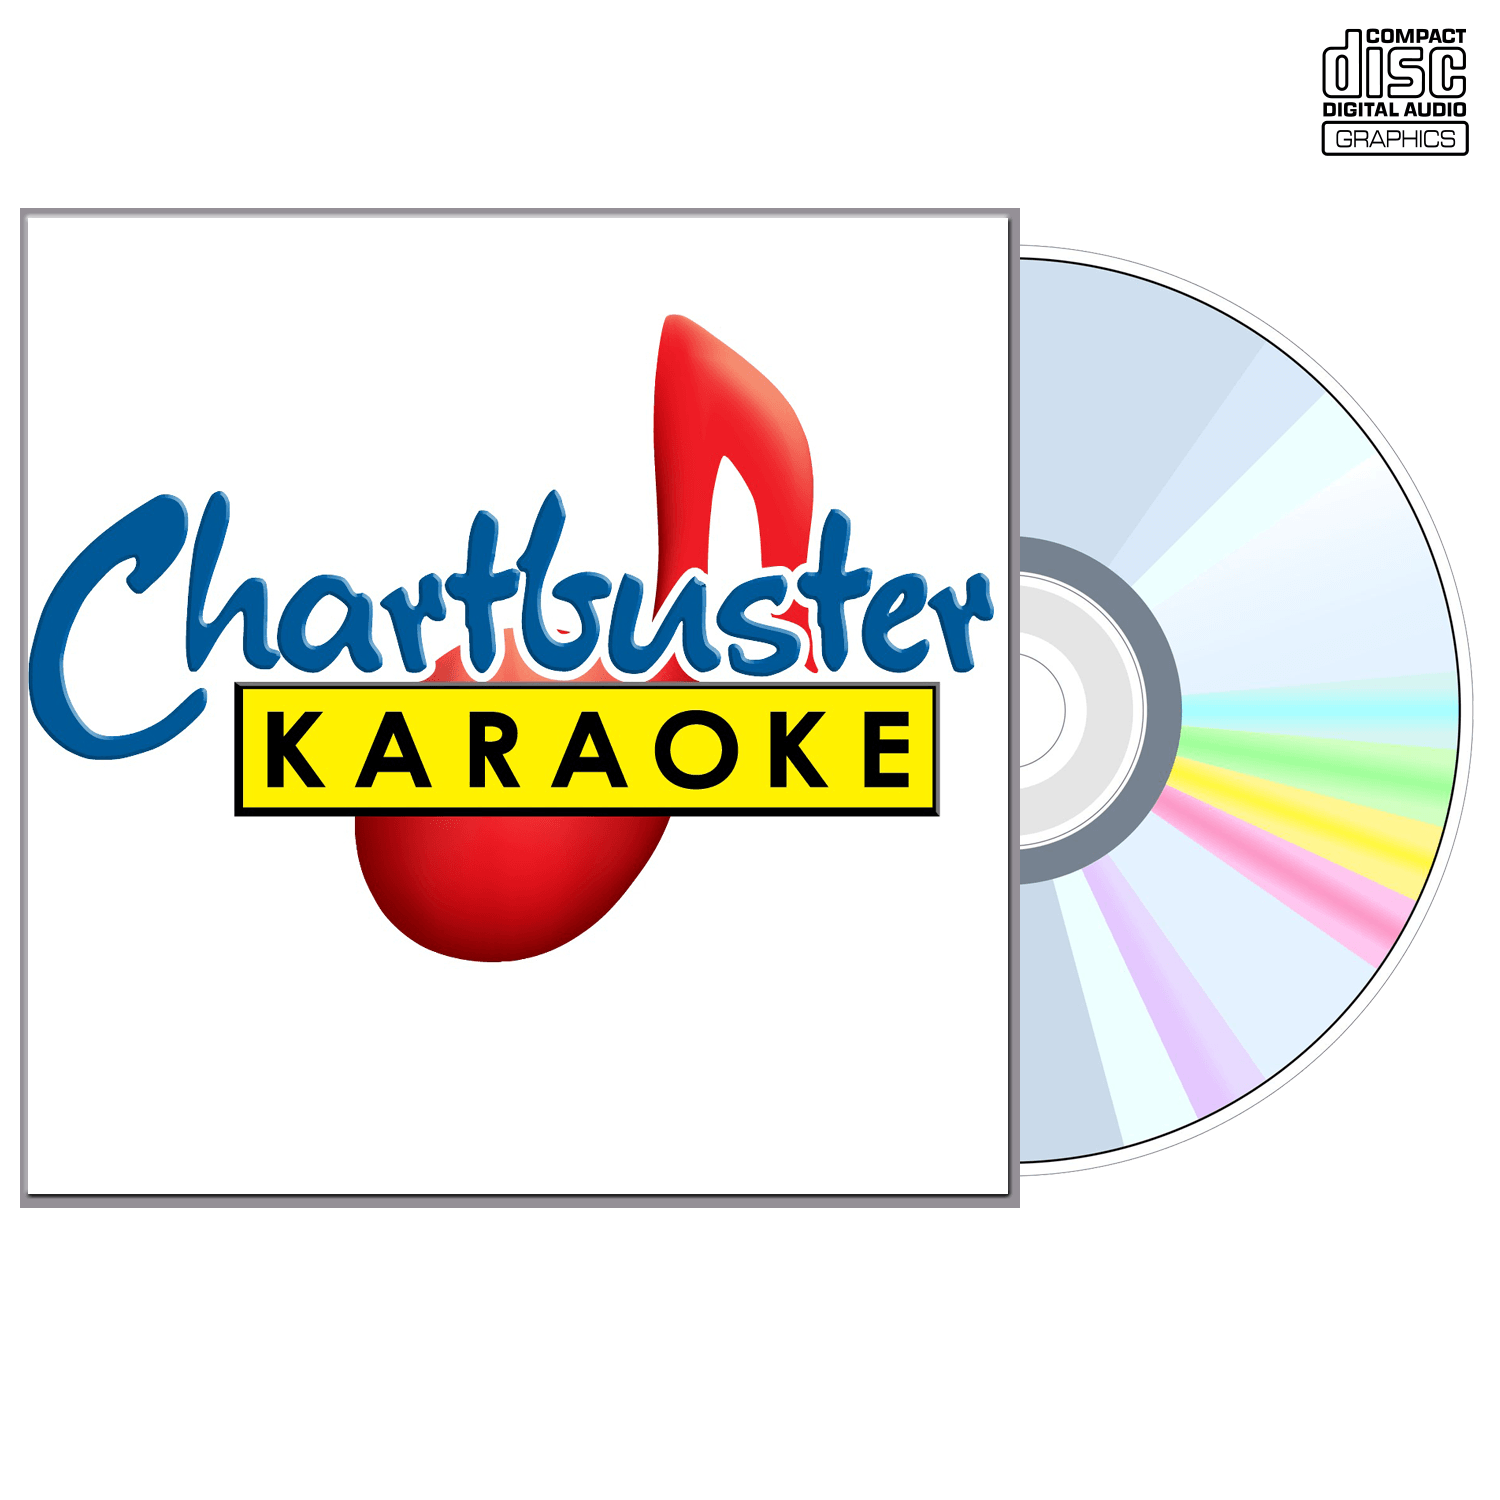 David Allan Coe - CD+G - Chartbuster Karaoke - Karaoke Home Entertainment